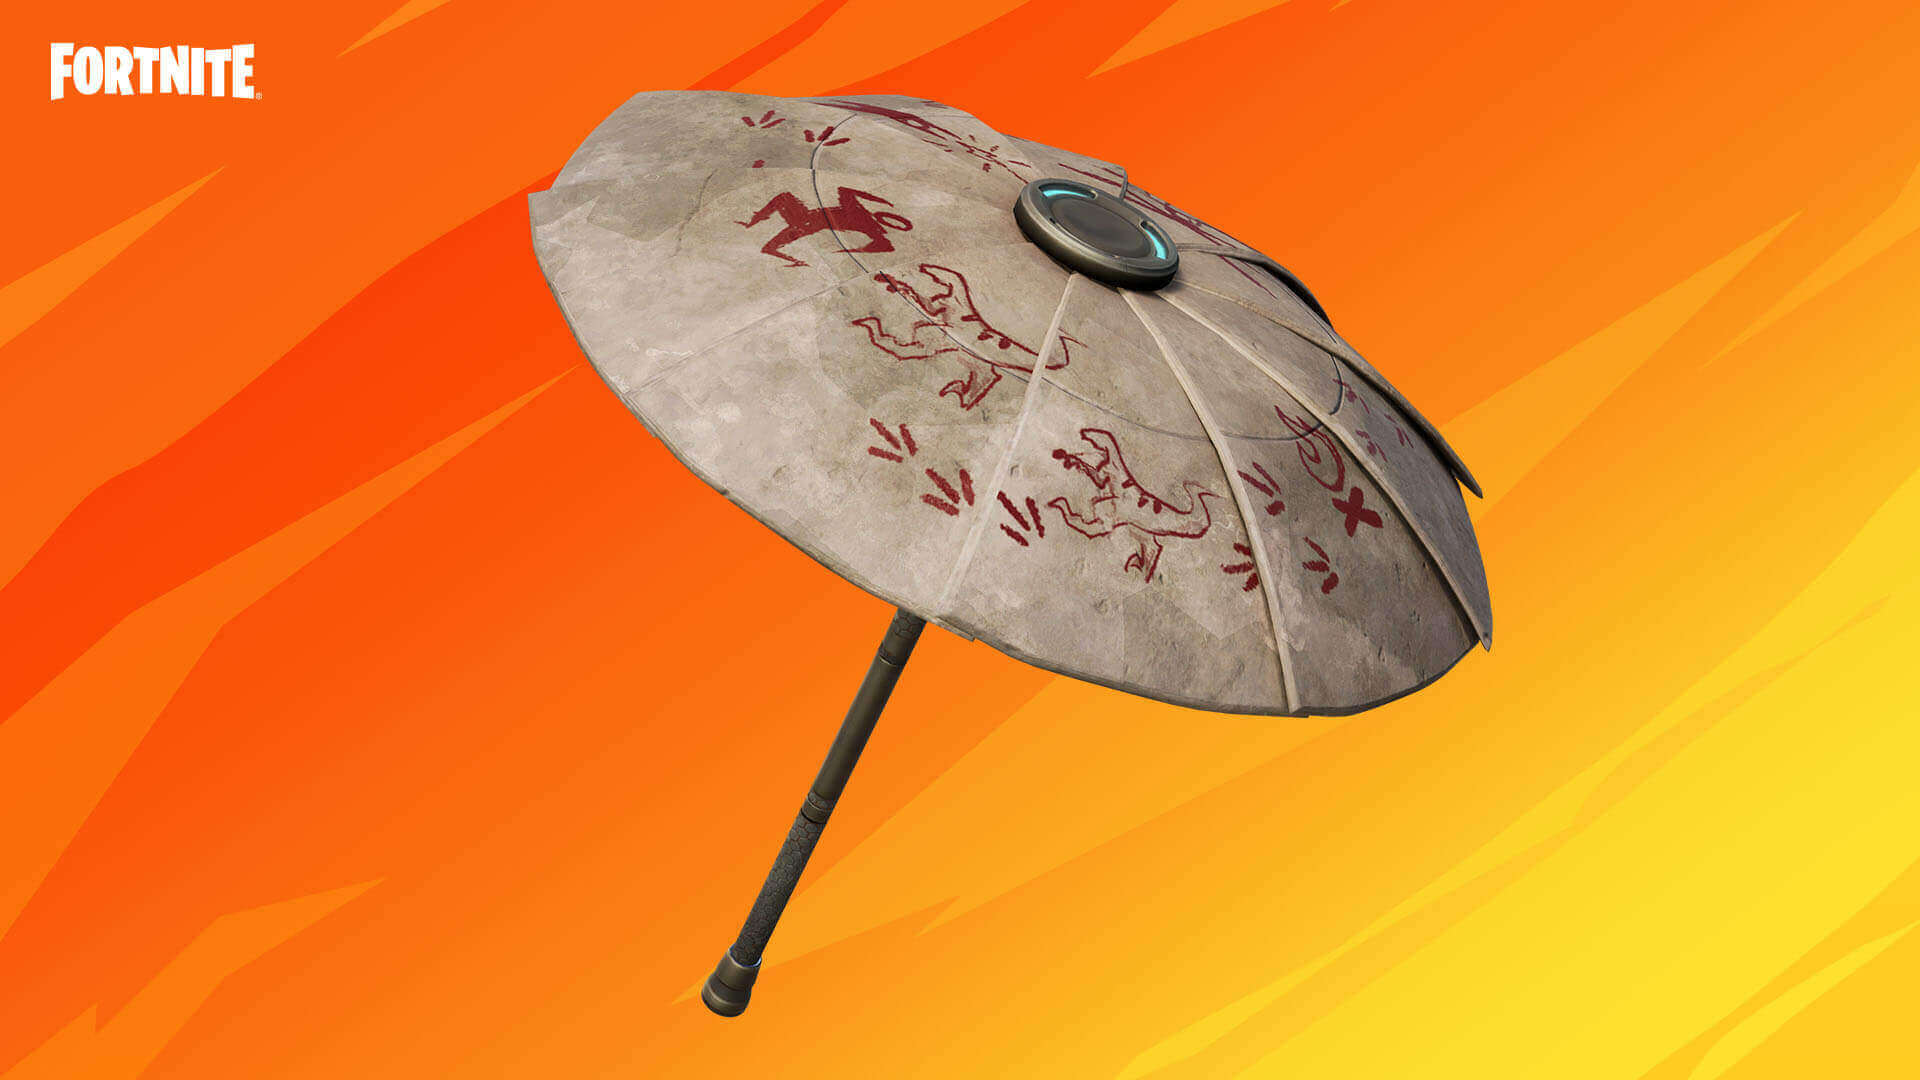 Impossible Escapist Umbrella in Fortnite